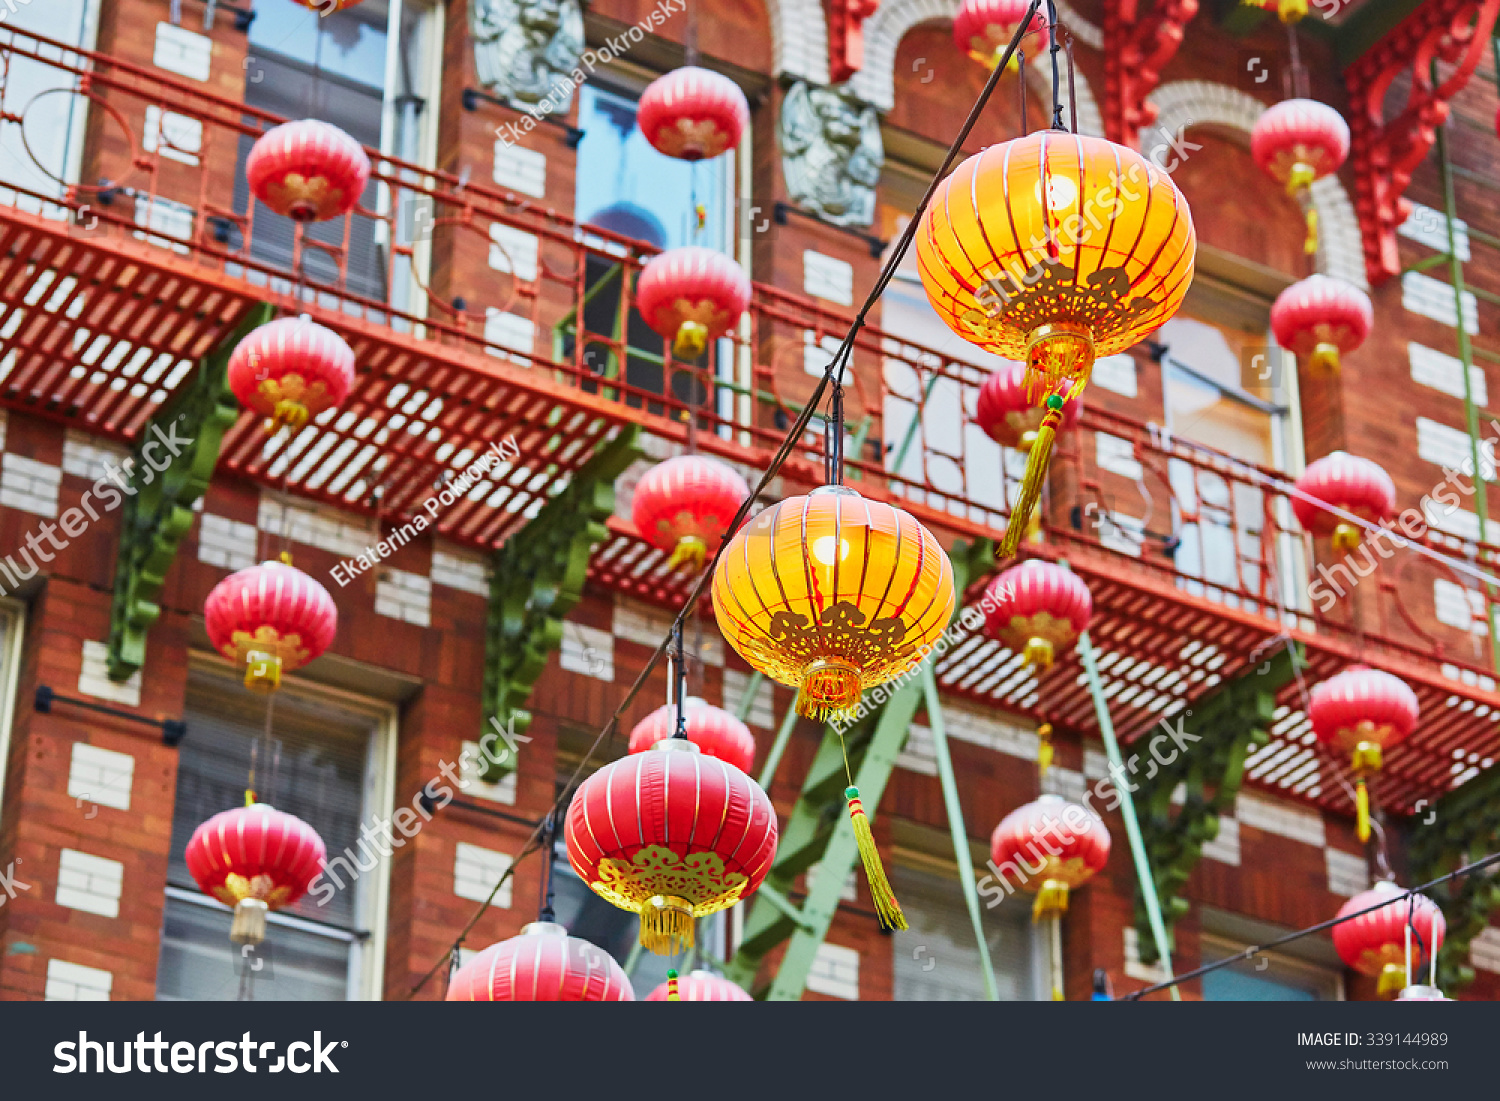 Beautiful red Chinese lanterns in Chinatown of San Francisco, California, USA #339144989